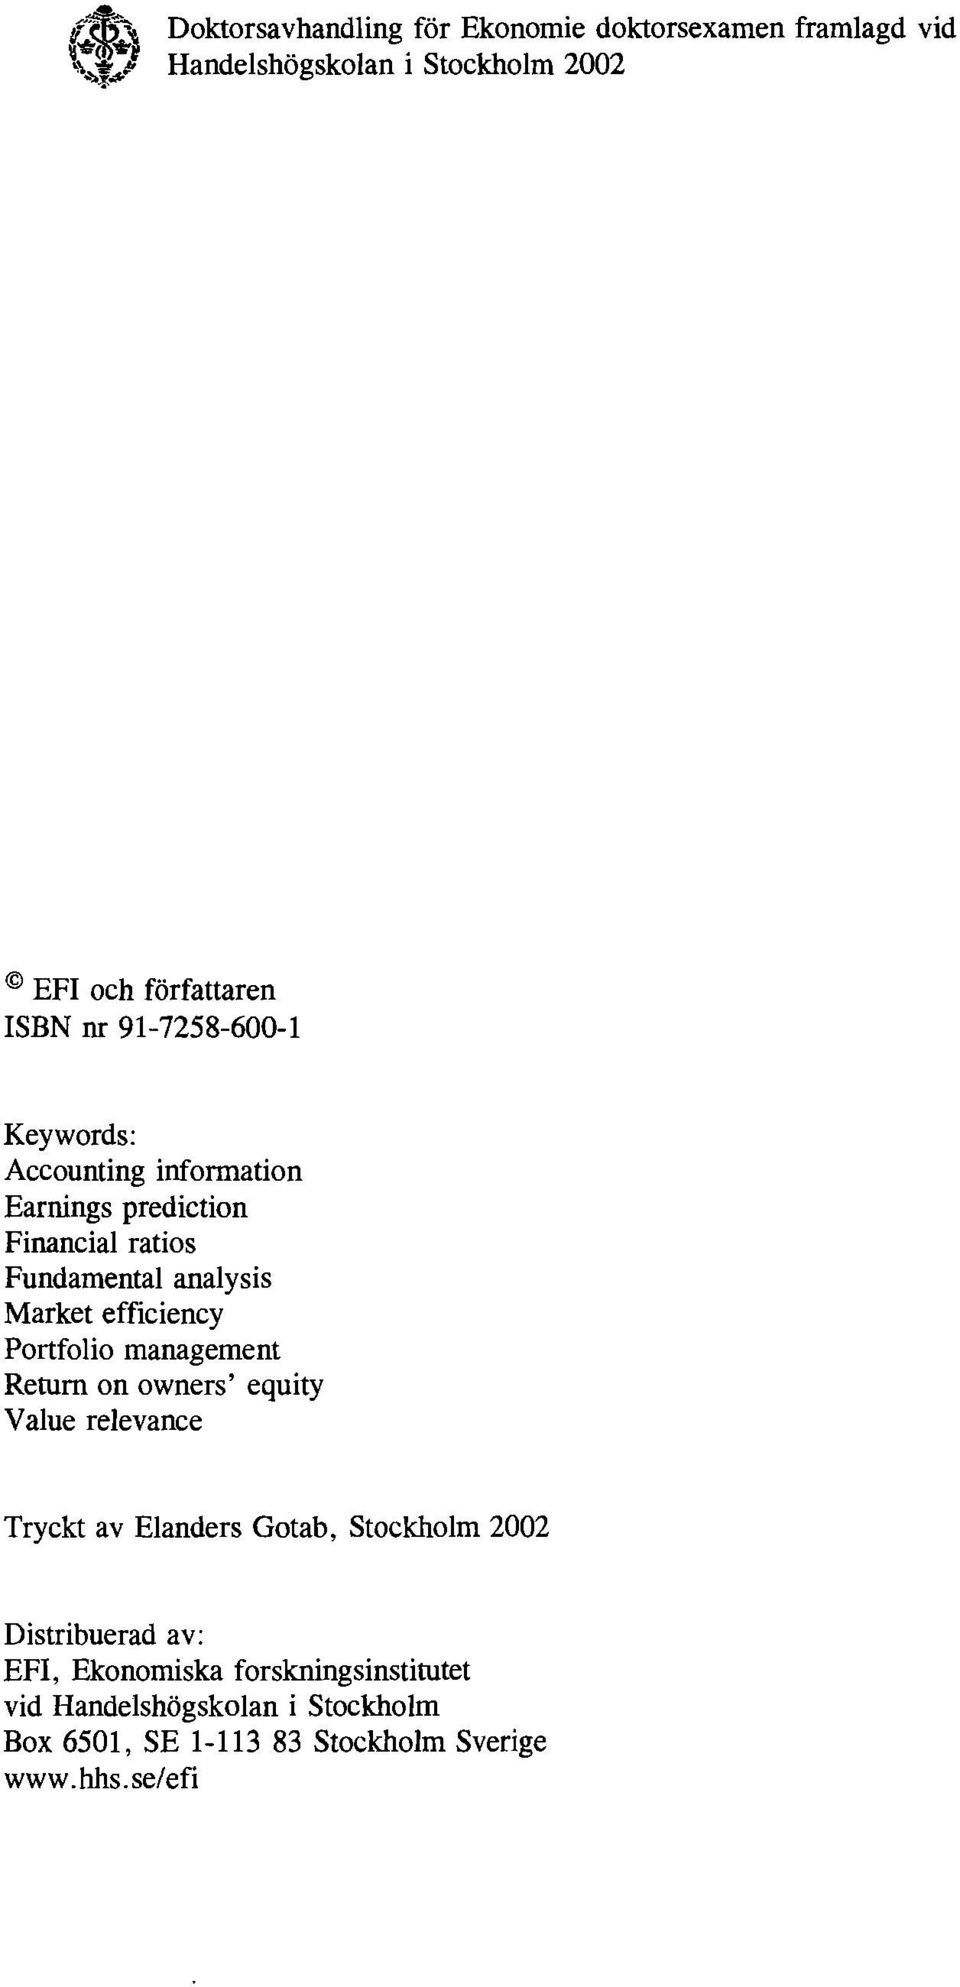 efficiency Portfolio management Return on owners' equity Value relevance Tryckt av Elanders Gotab, Stockholm 2002